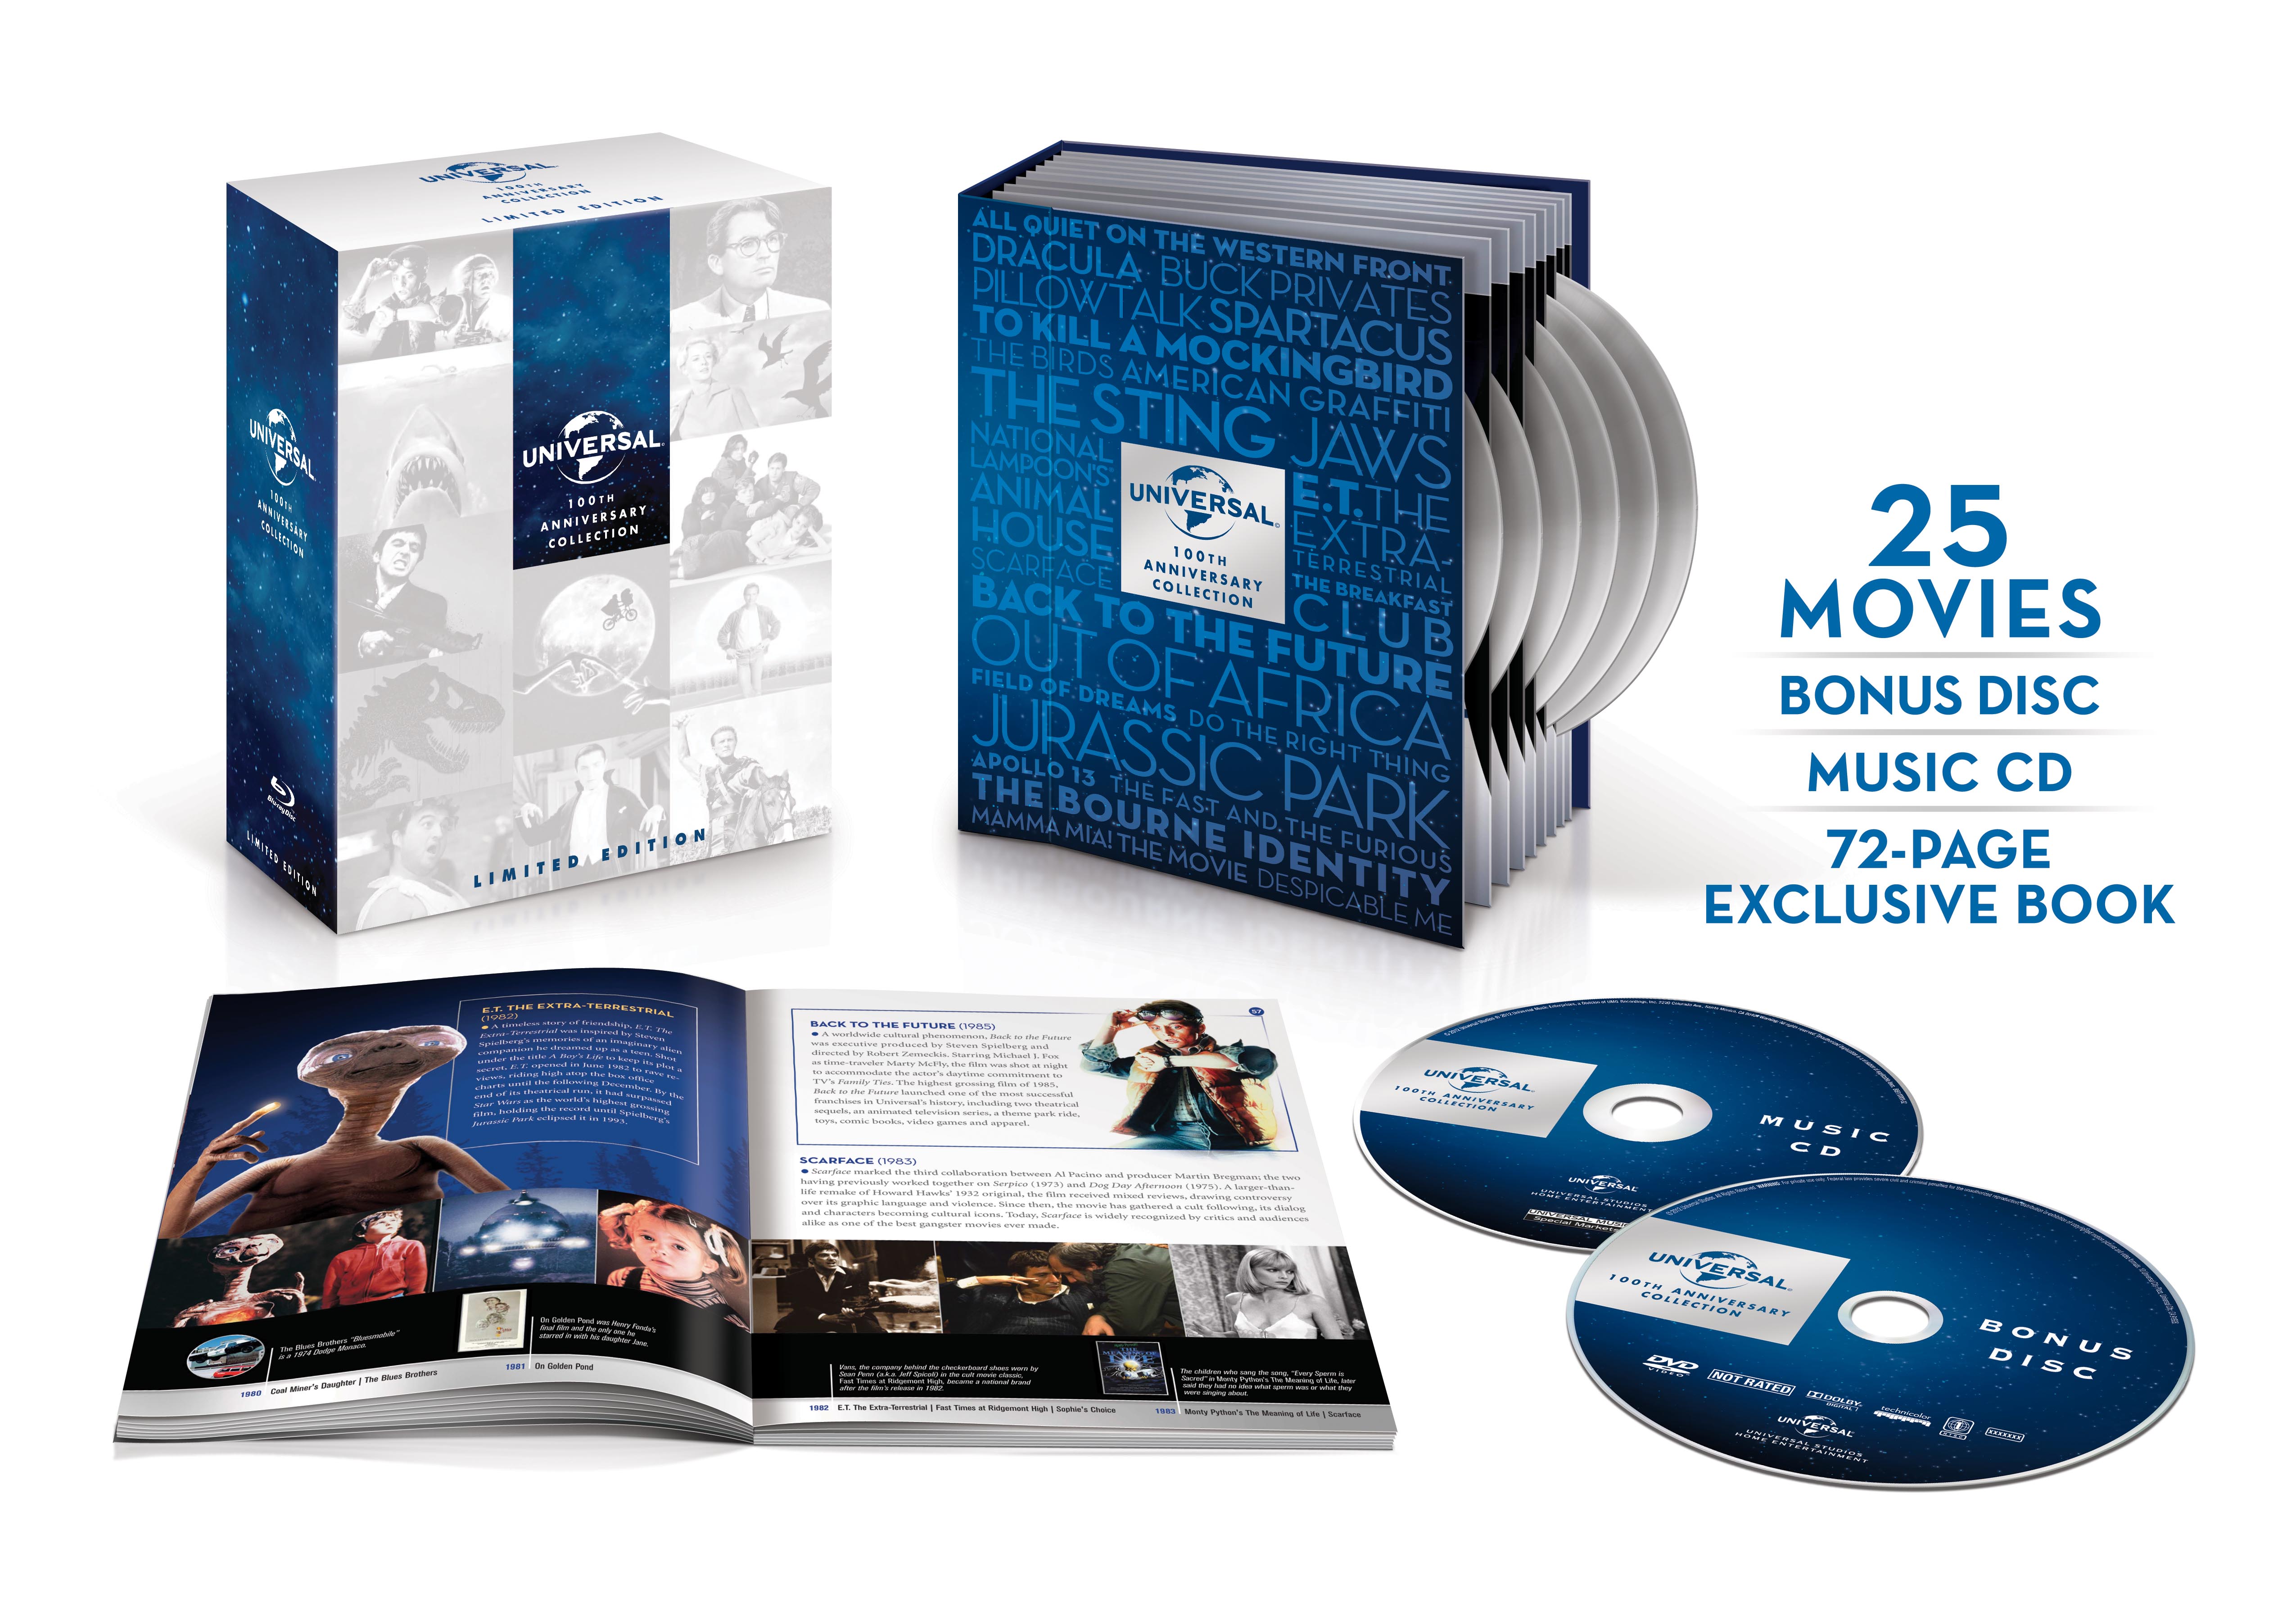 Limited edition перевод. Universal 100th Anniversary. Blu ray collection. Коллекция Blu ray. Anniversary Edition диски.